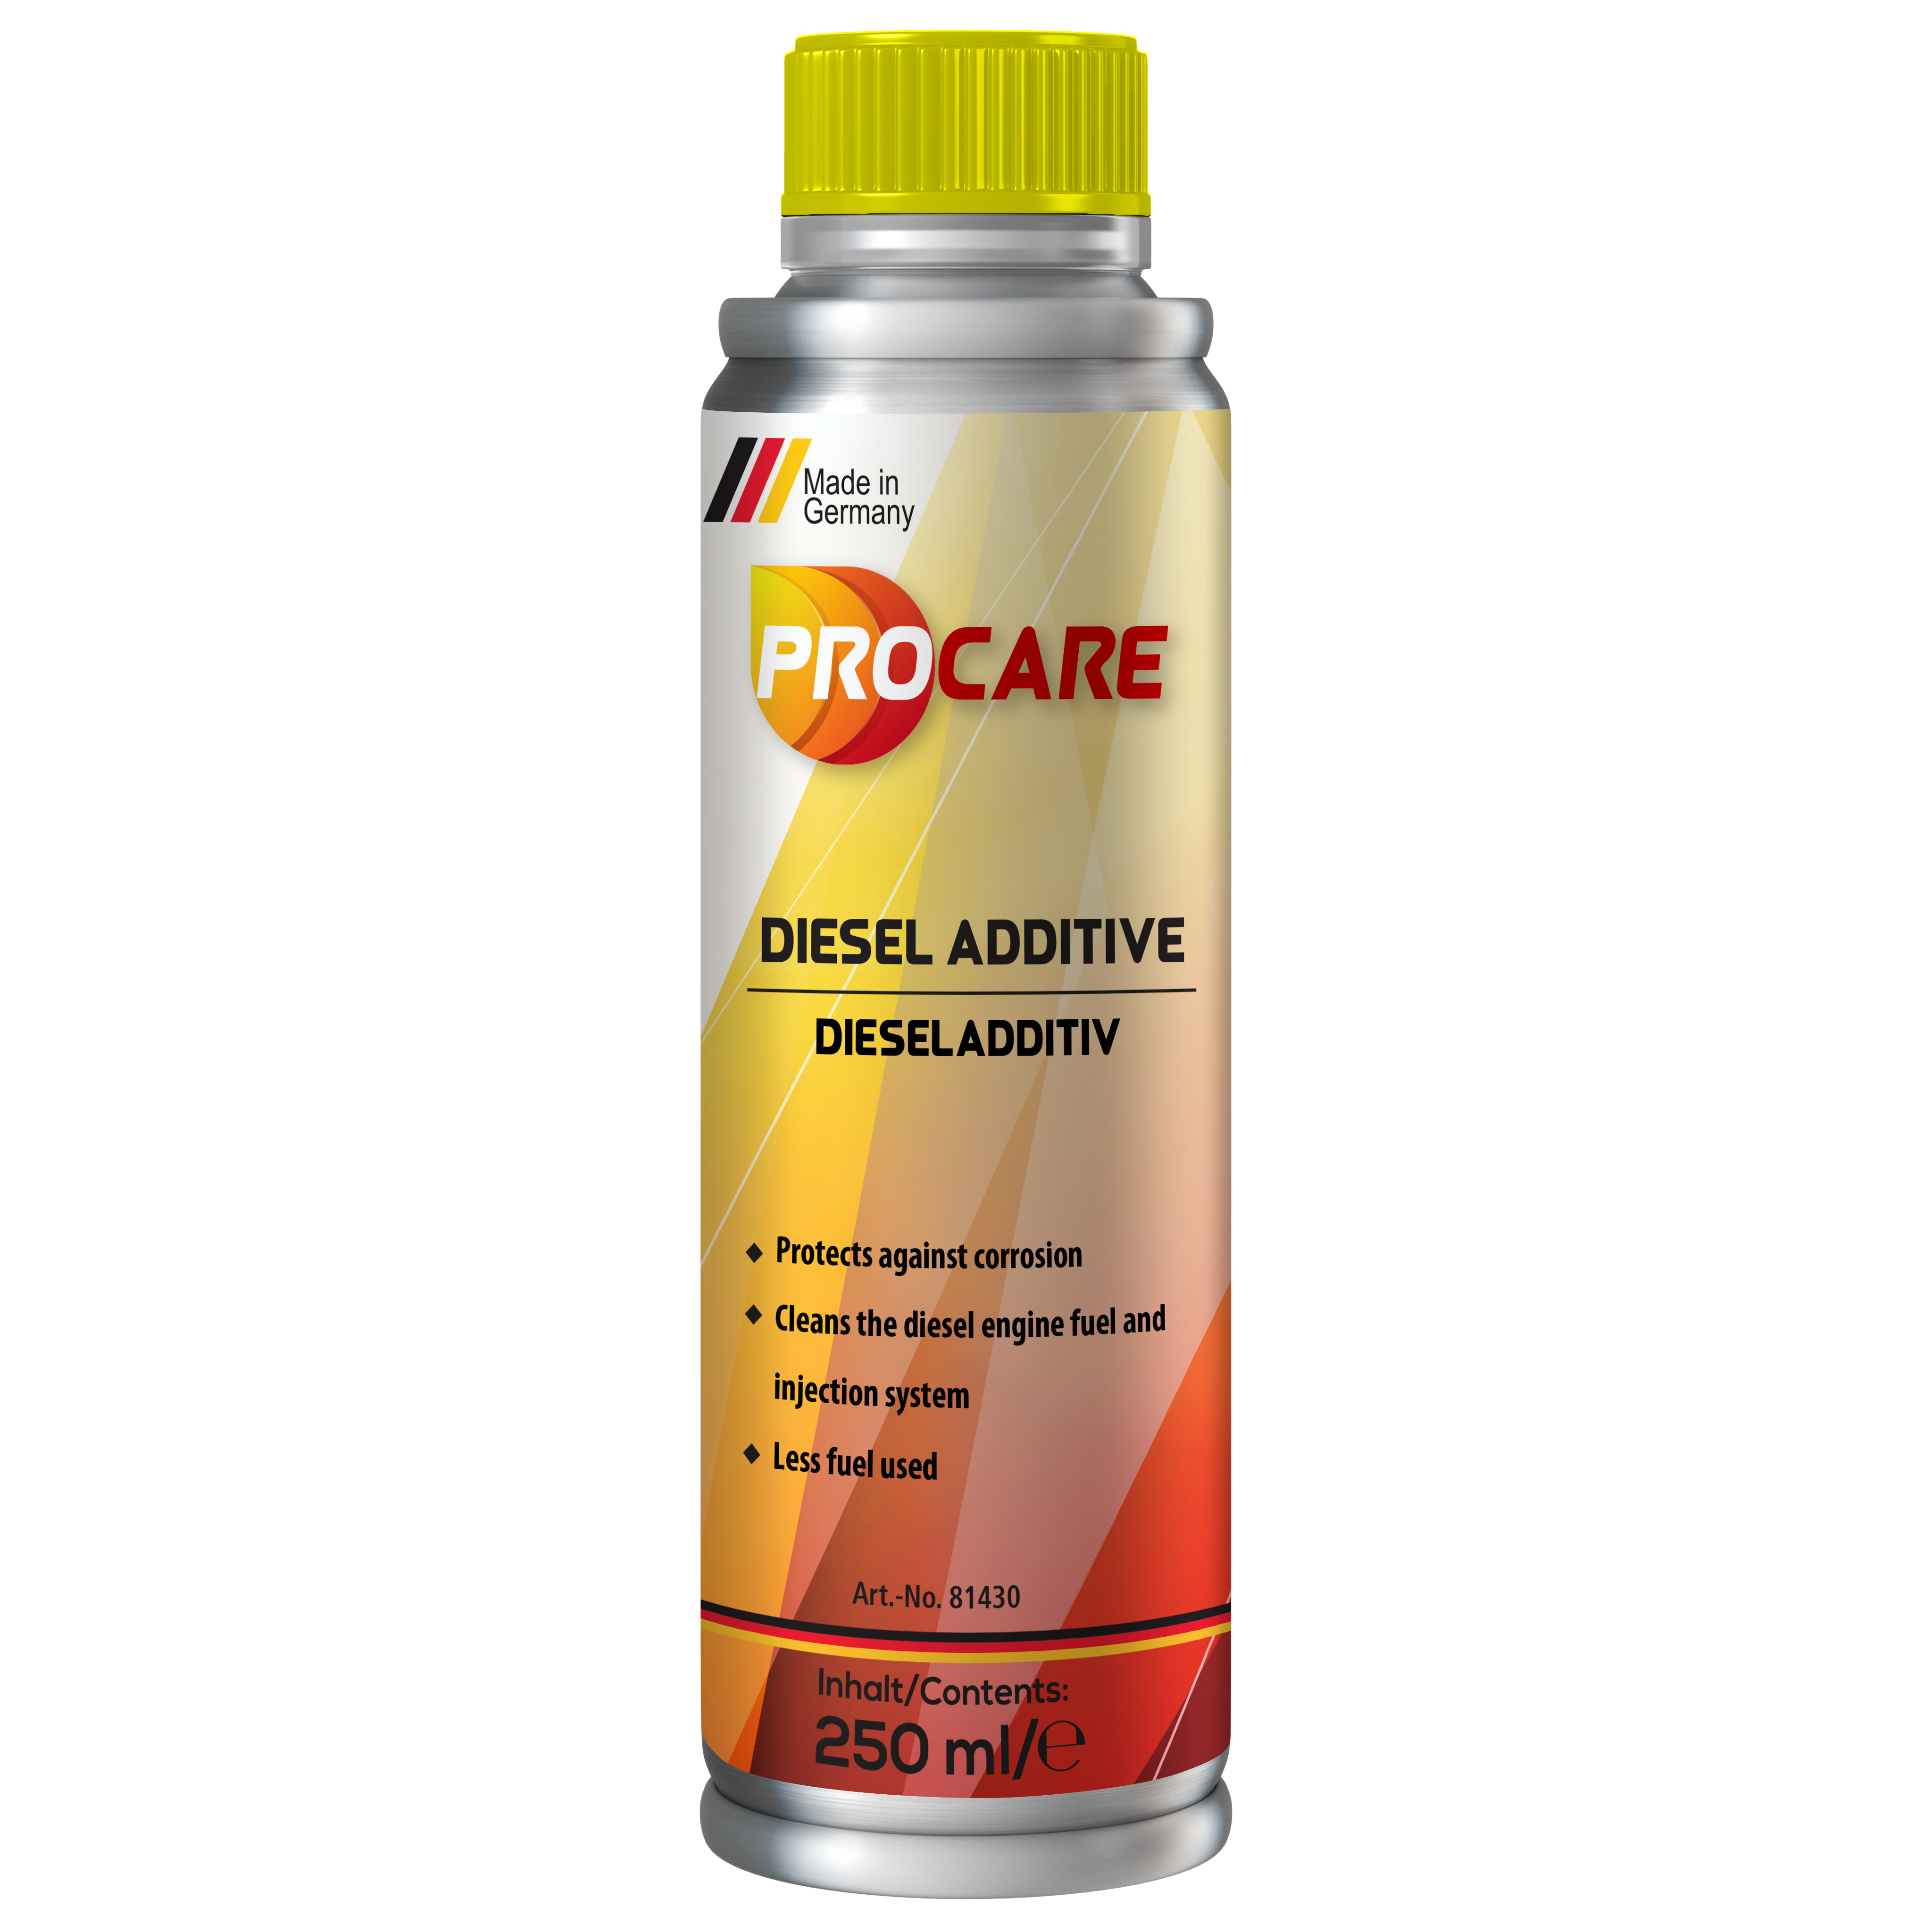 https://www.procare-lubricants.de/Products-spec-sheets/additives/Fuel%20additives/DIESEL-ADDITIVE-Image.jpg